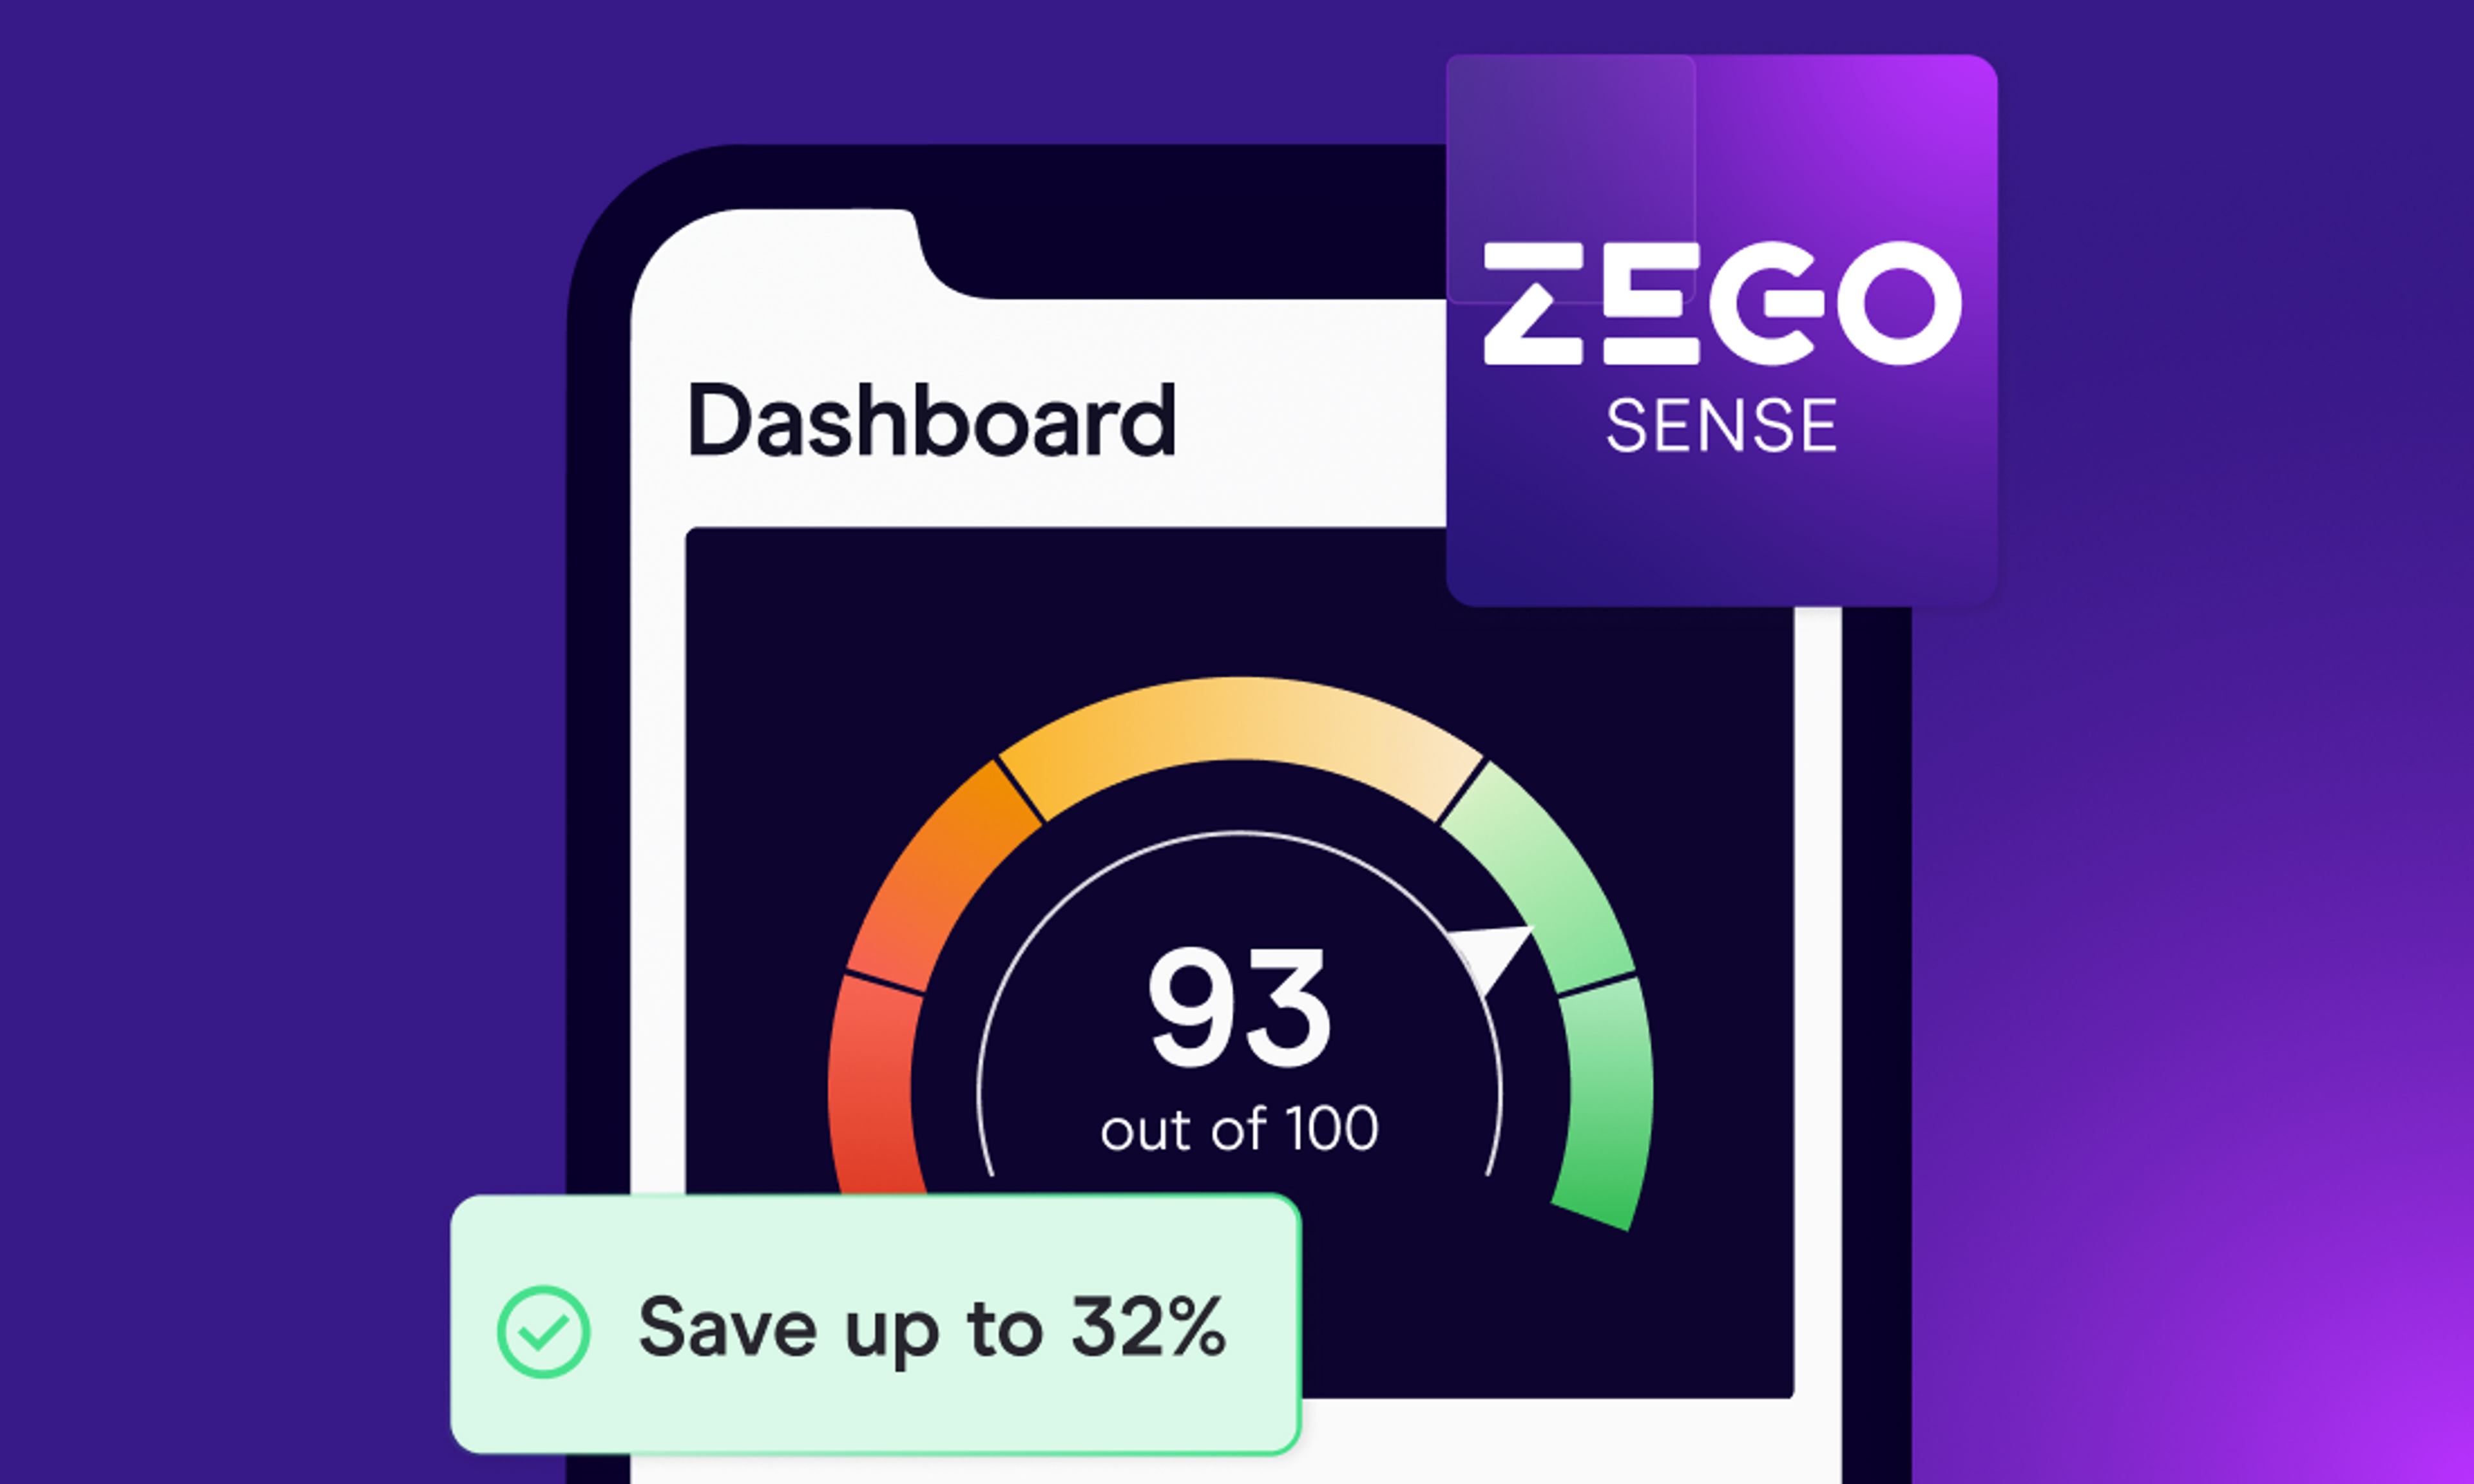 Zego launches Sense